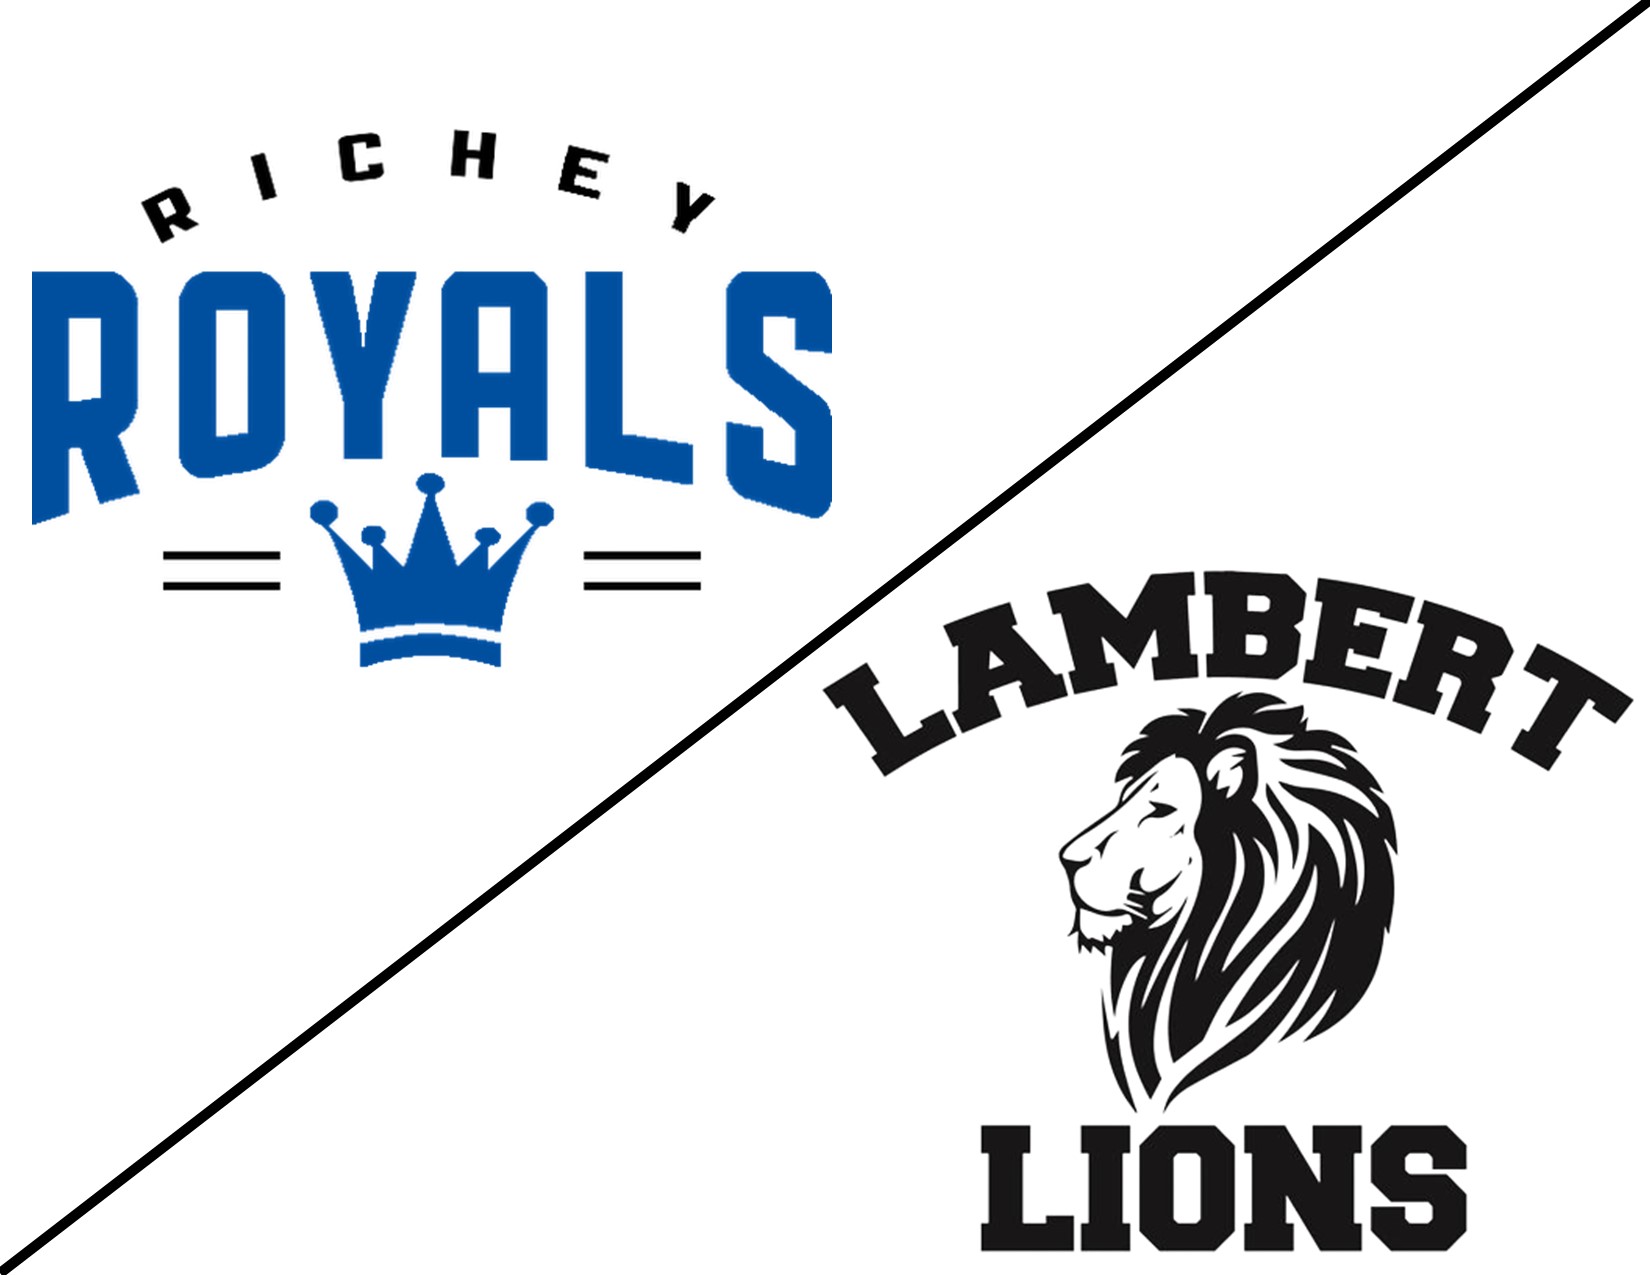 Richey Royals - Lambert Lions Logo